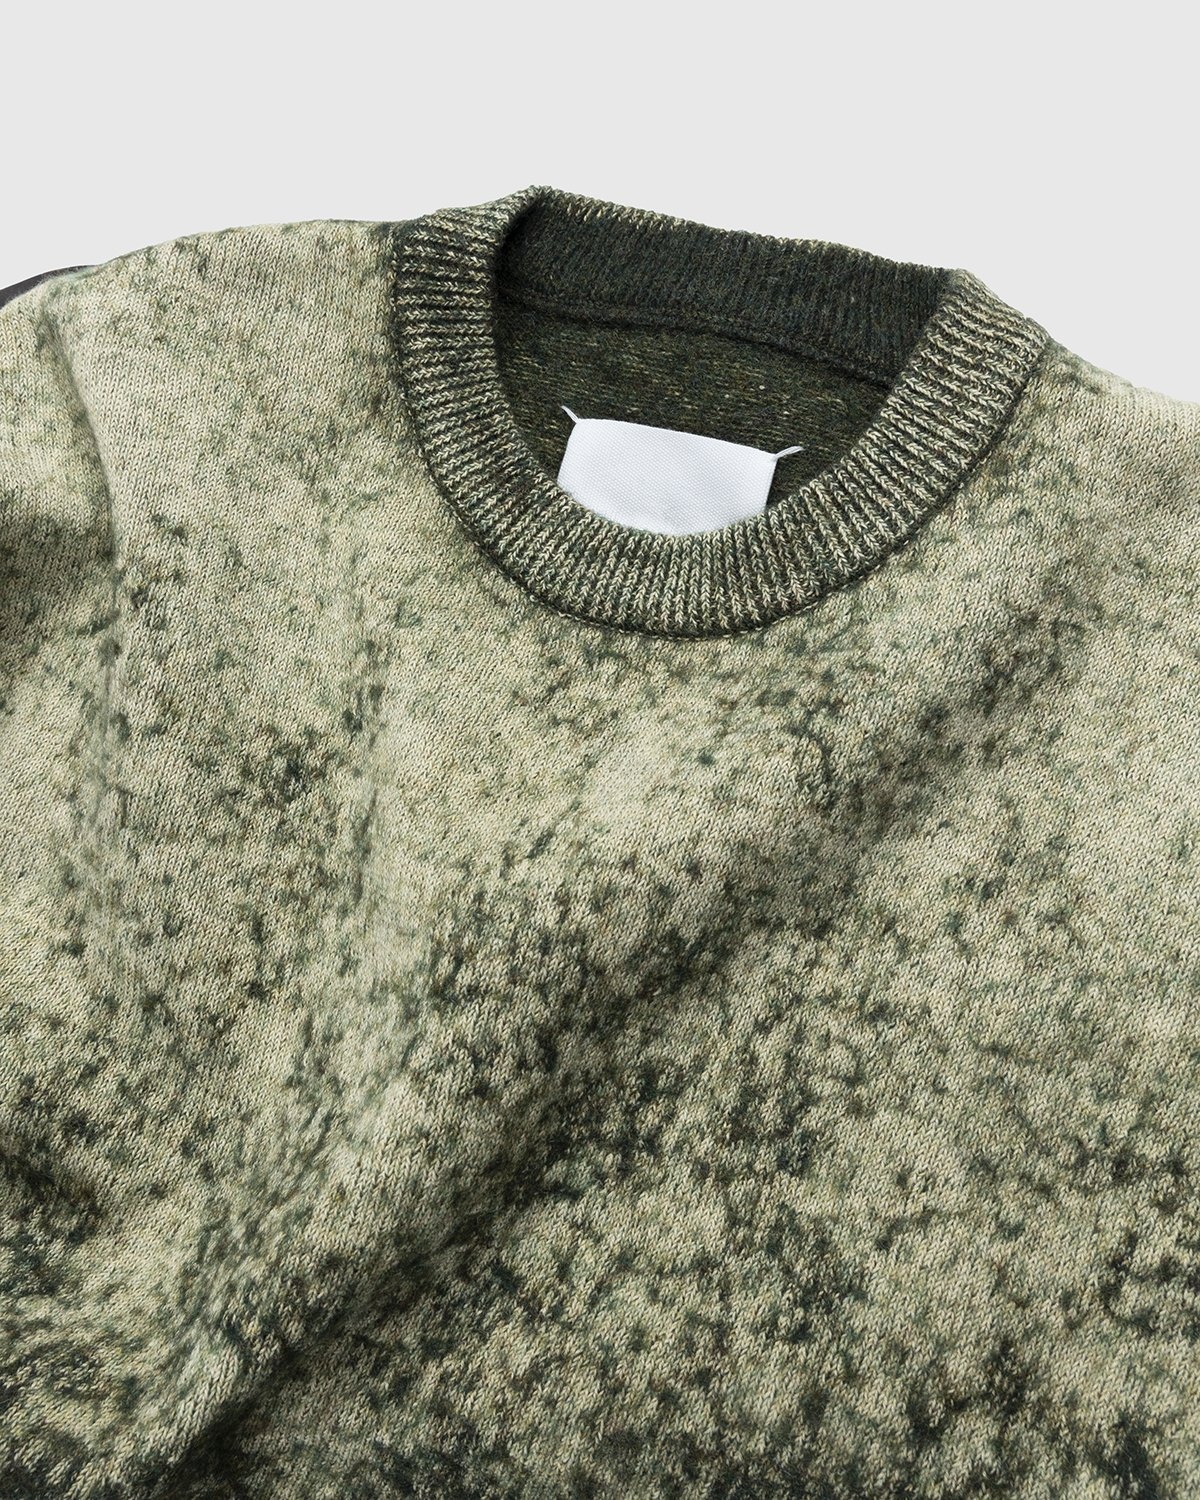 Maison Margiela – Discharged Wool Sweater - Knitwear - Green - Image 7